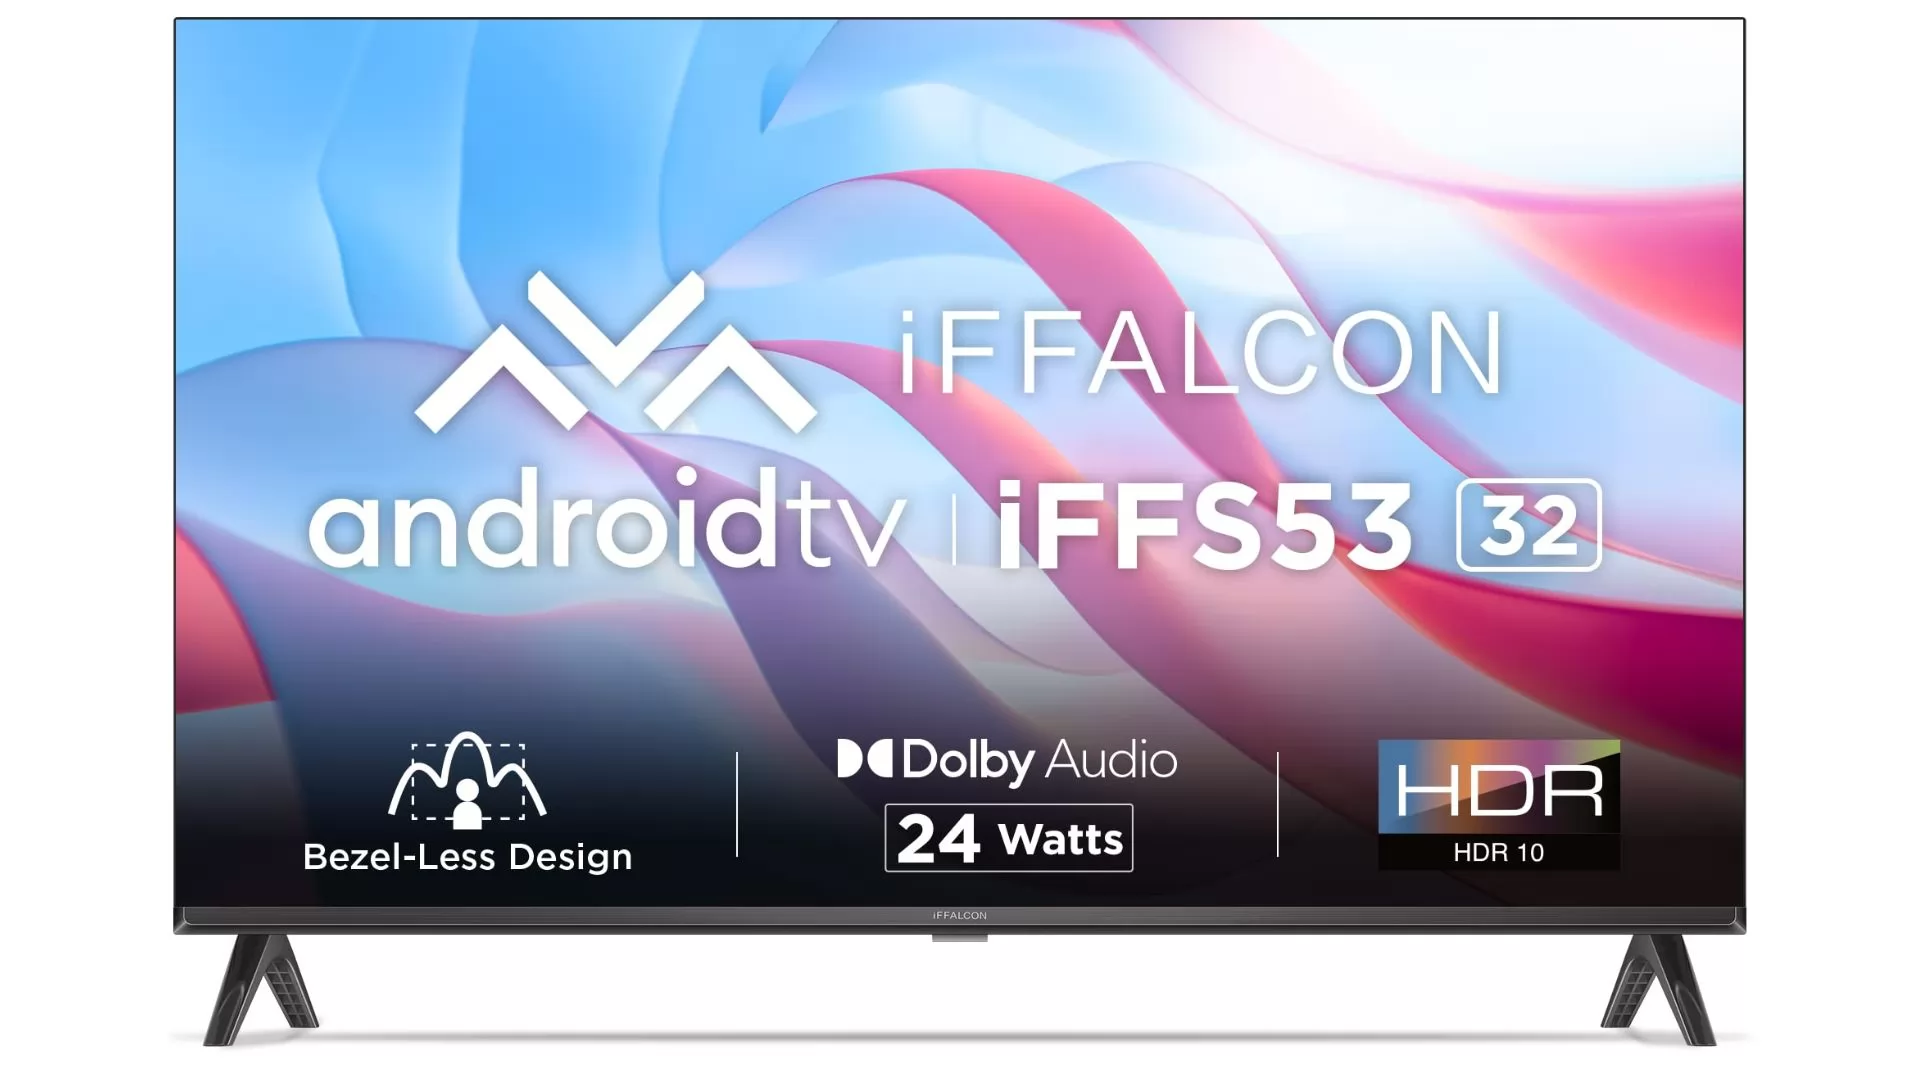 iFFALCON Bezel-Less S Series HD Ready 